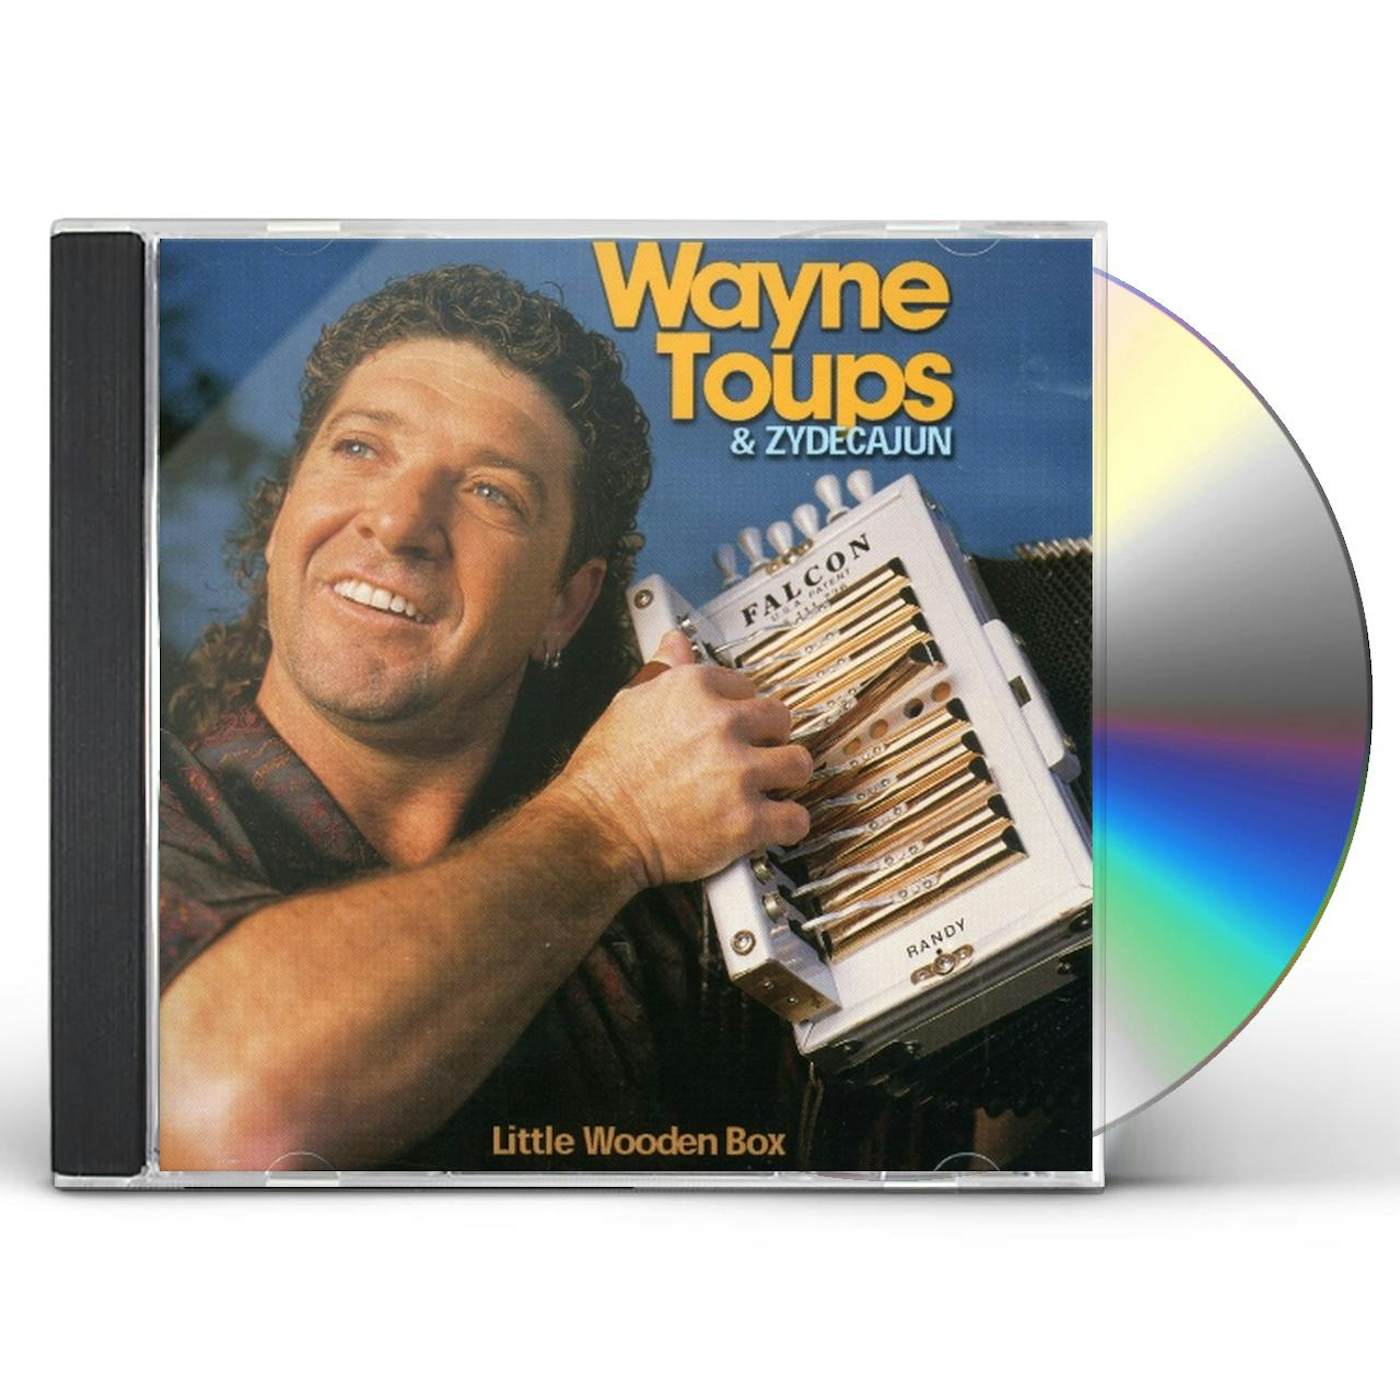 Wayne Toups & Zydecajun LITTLE WOODEN BOX CD